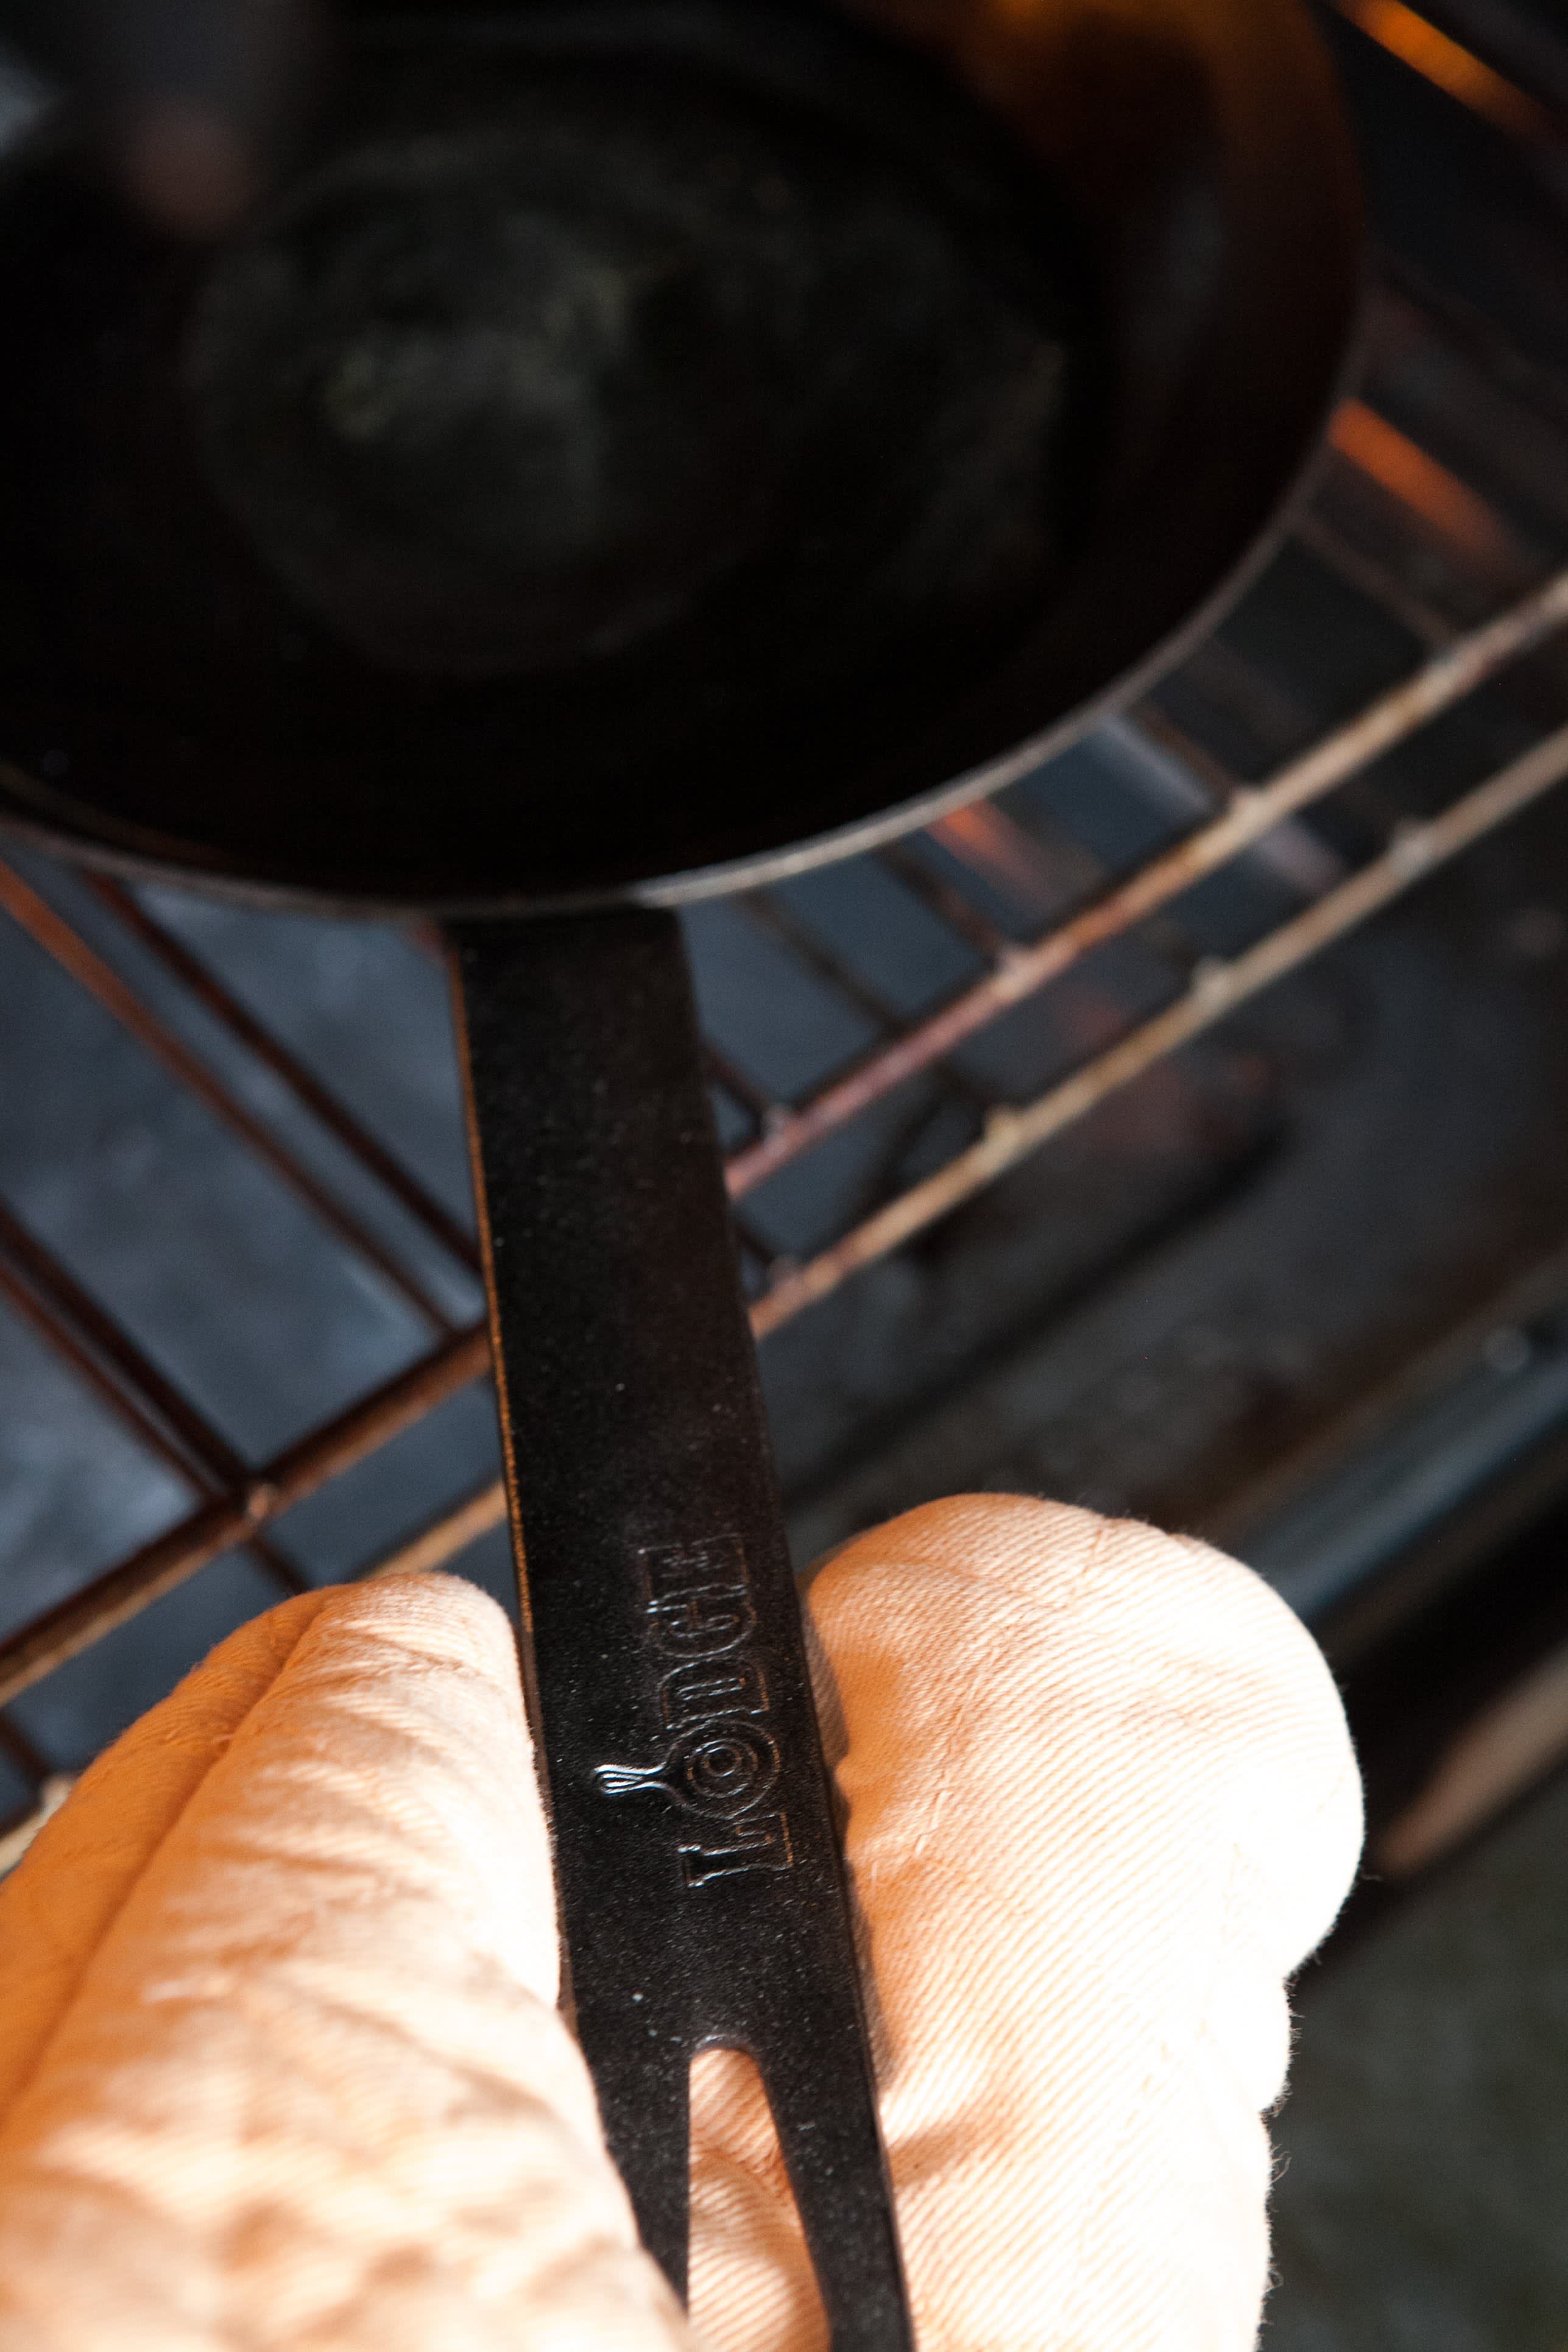 gotham steel pan seasoning instructions